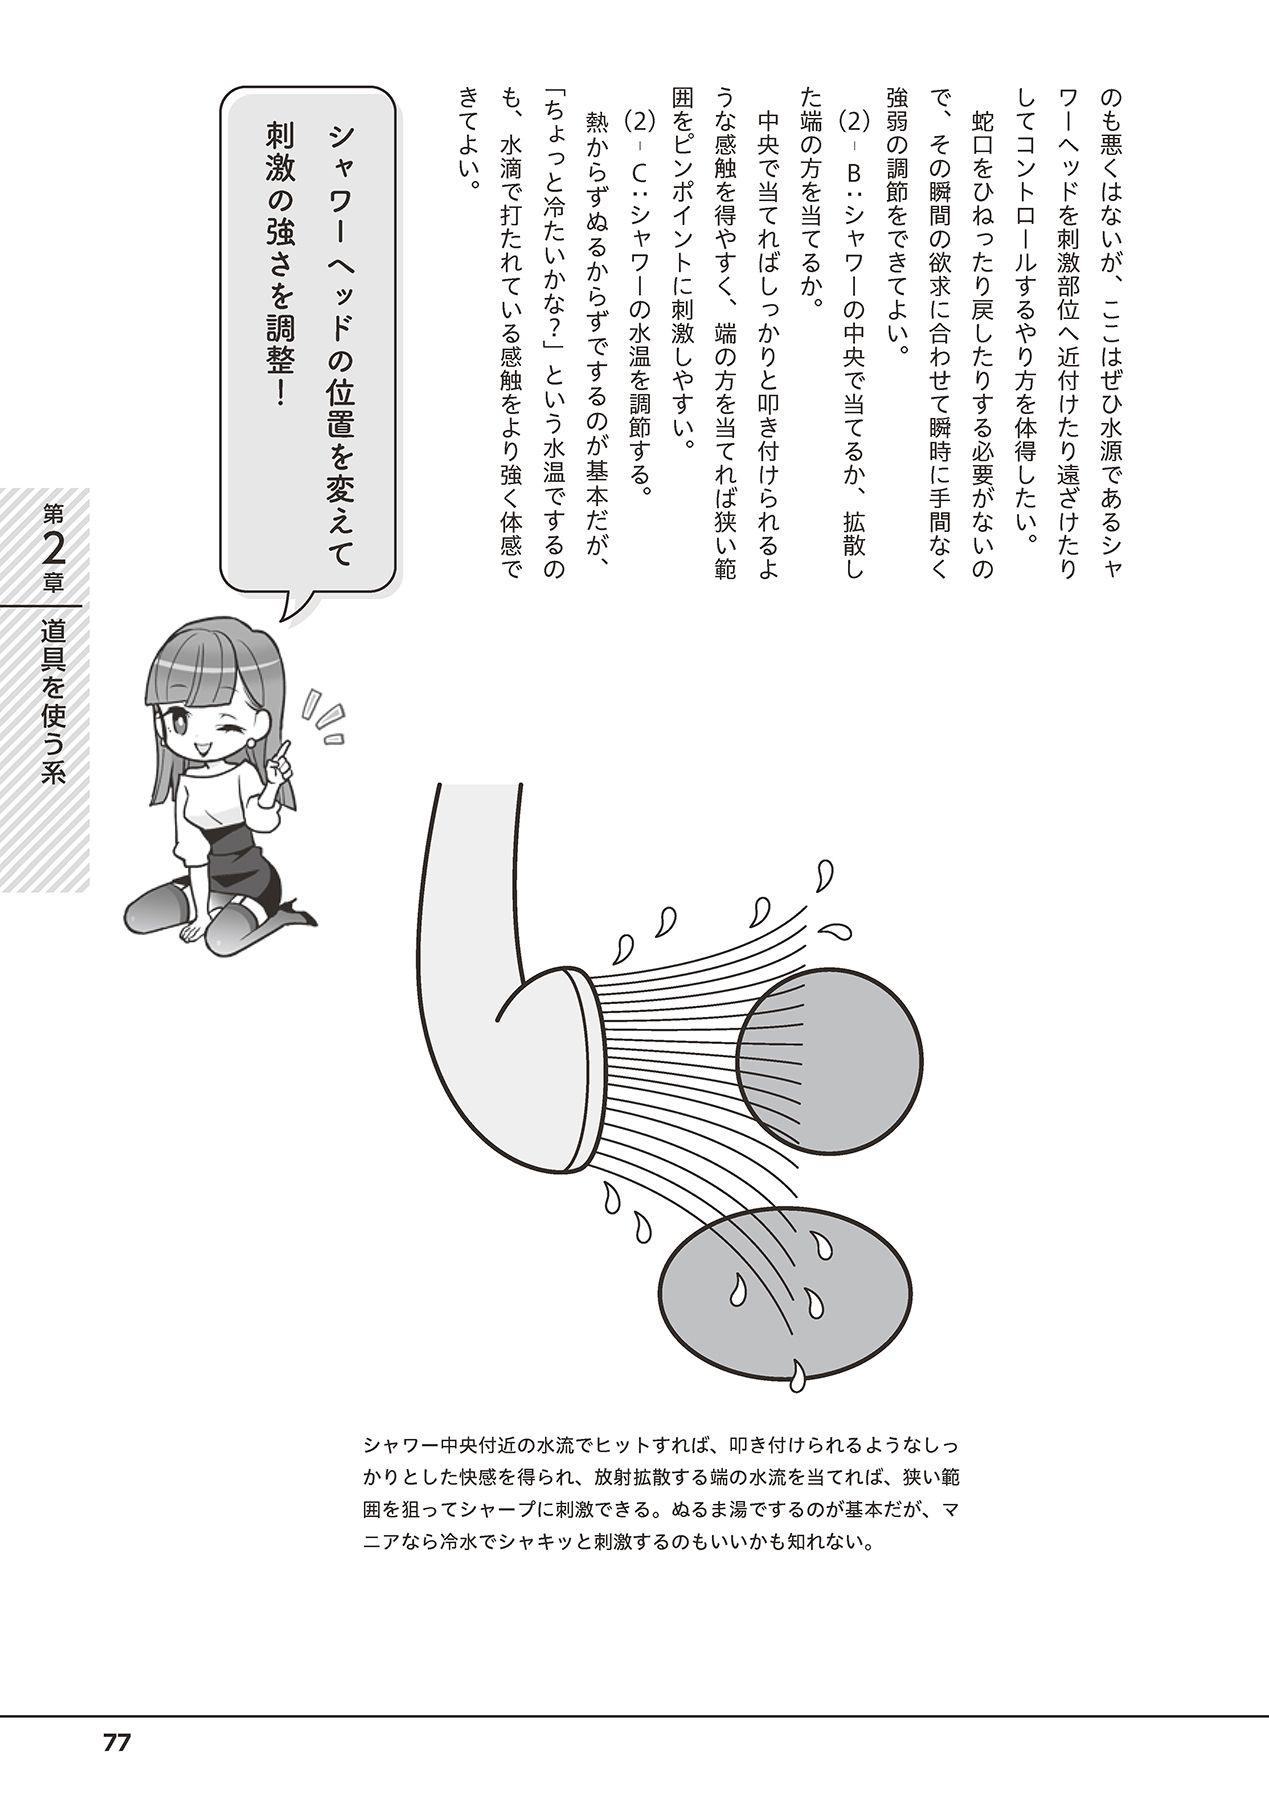 Otoko no Jii Onanie Kanzen Manual Illustration Han...... Onanie Play 78